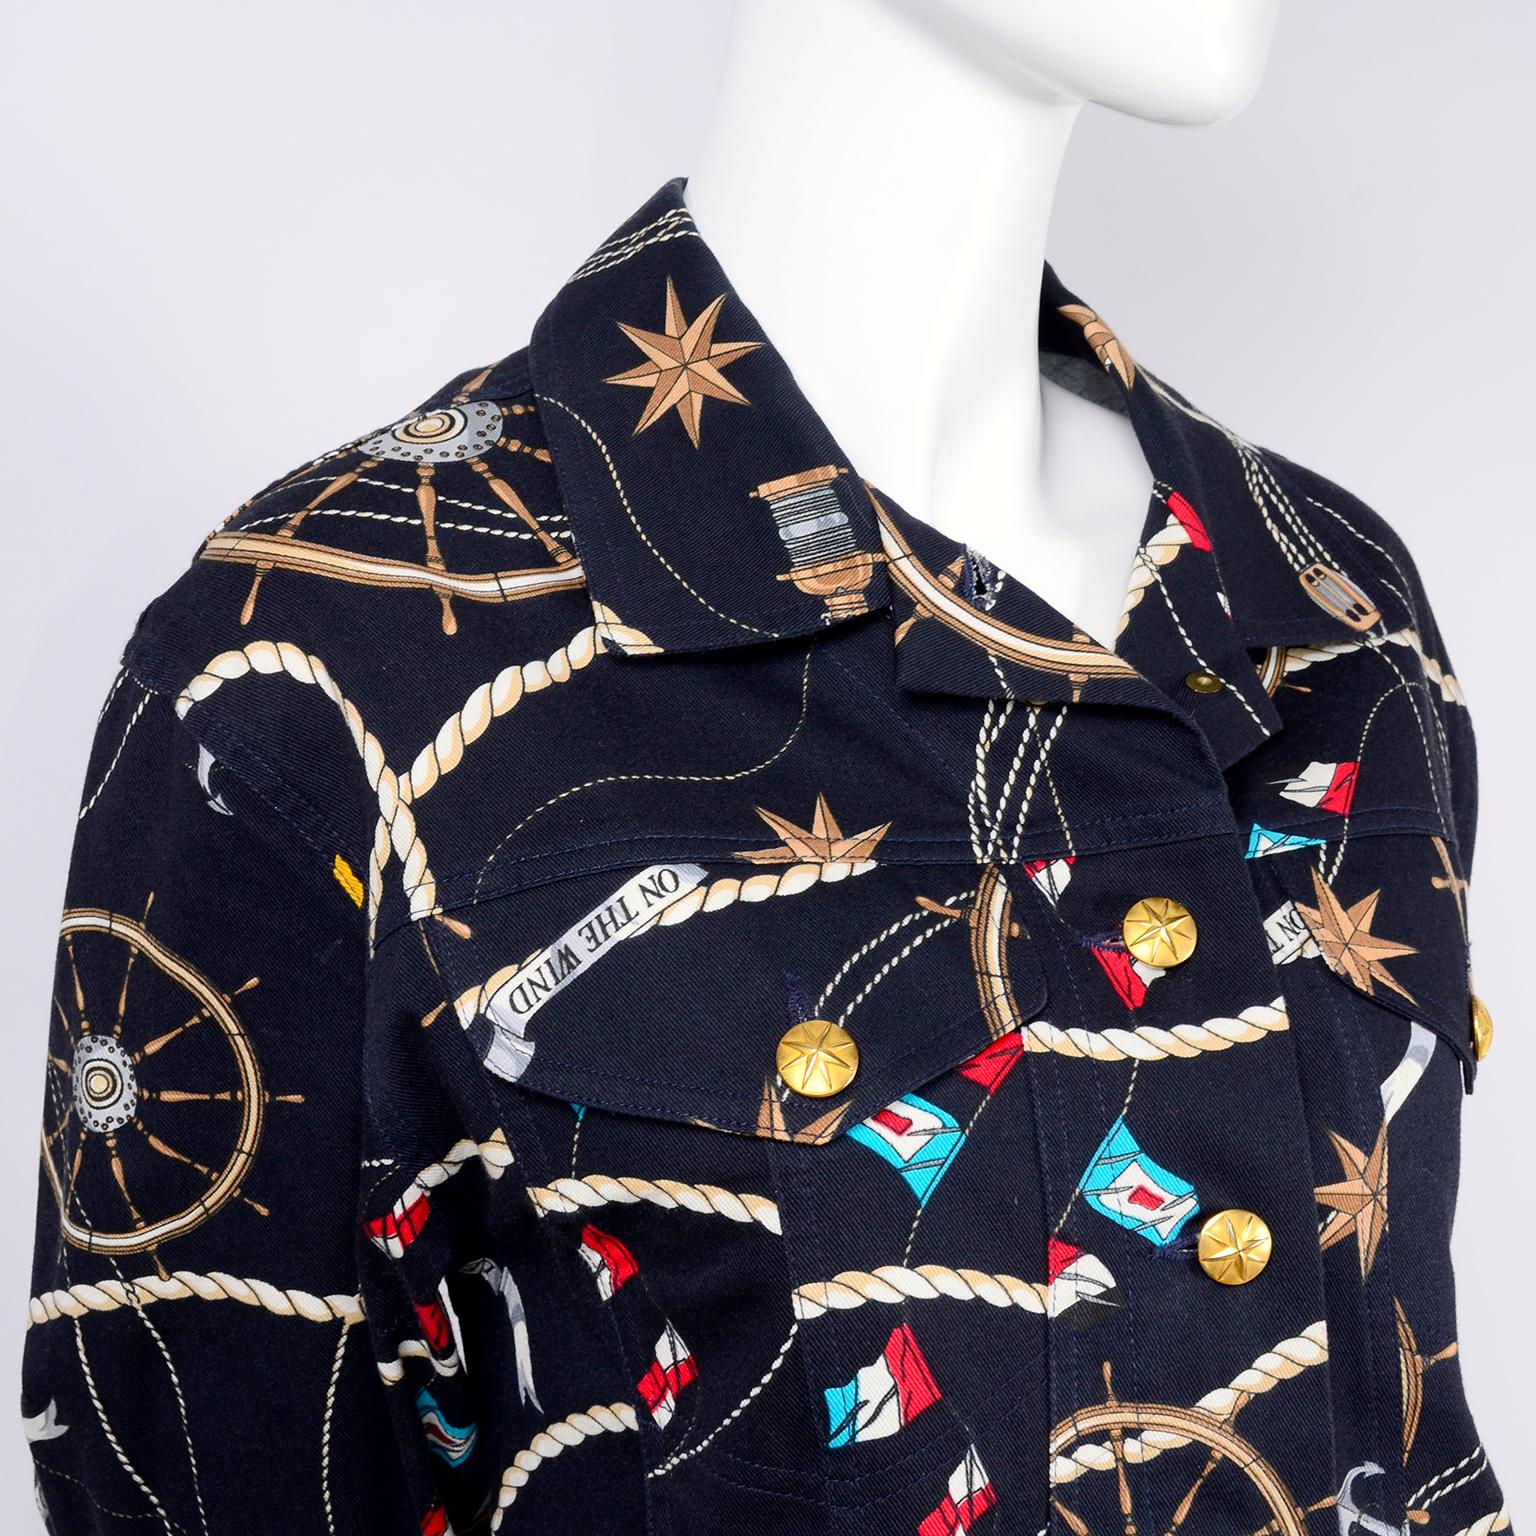 Mondi Vintage Skirt & Jacket in Black Denim Nautical Print W/ Gold Star Button 1